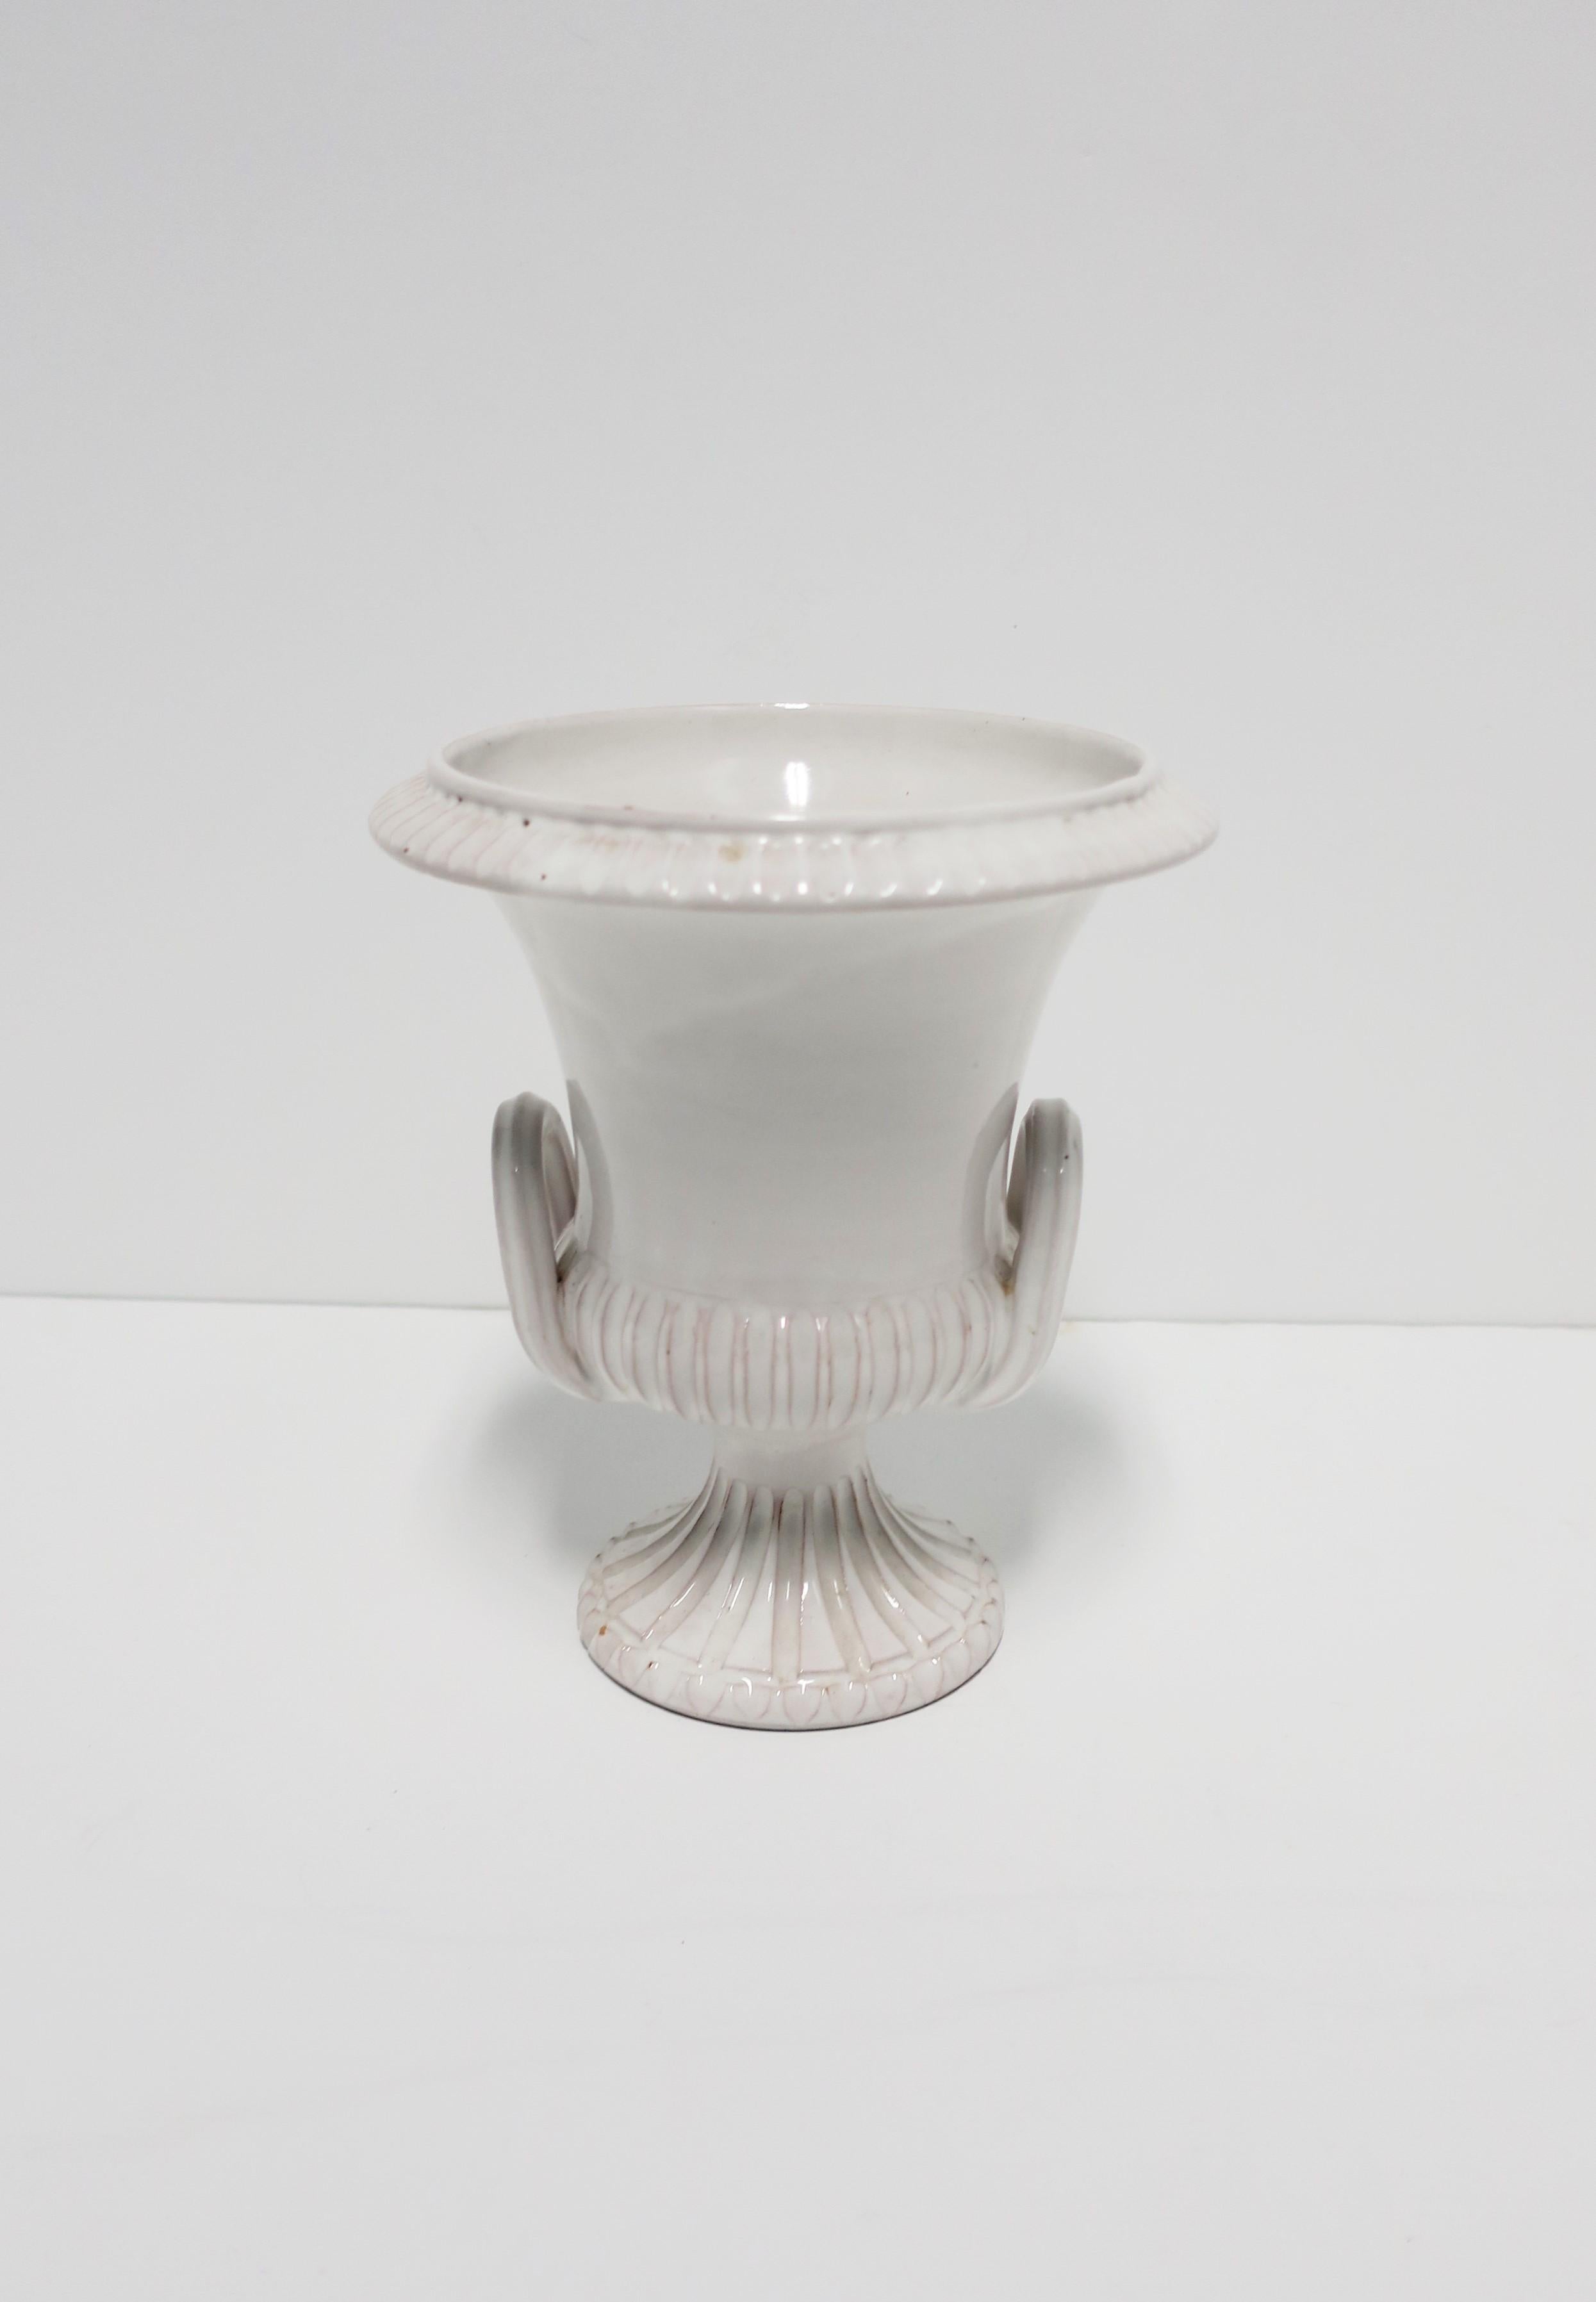 Glazed Italian White Pottery Urn Vessel or Vase